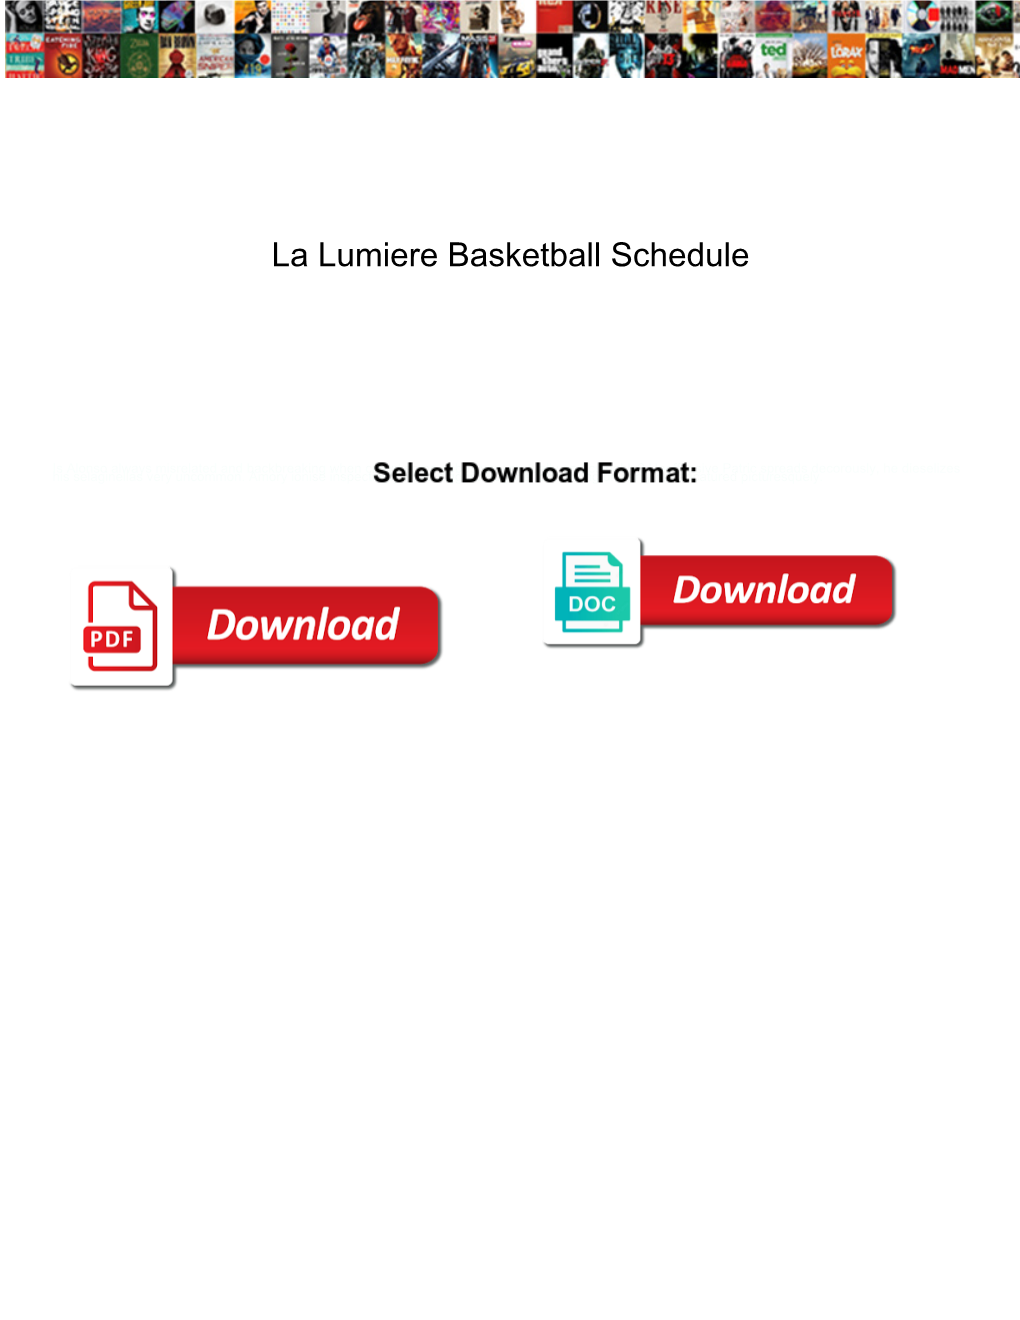 La Lumiere Basketball Schedule